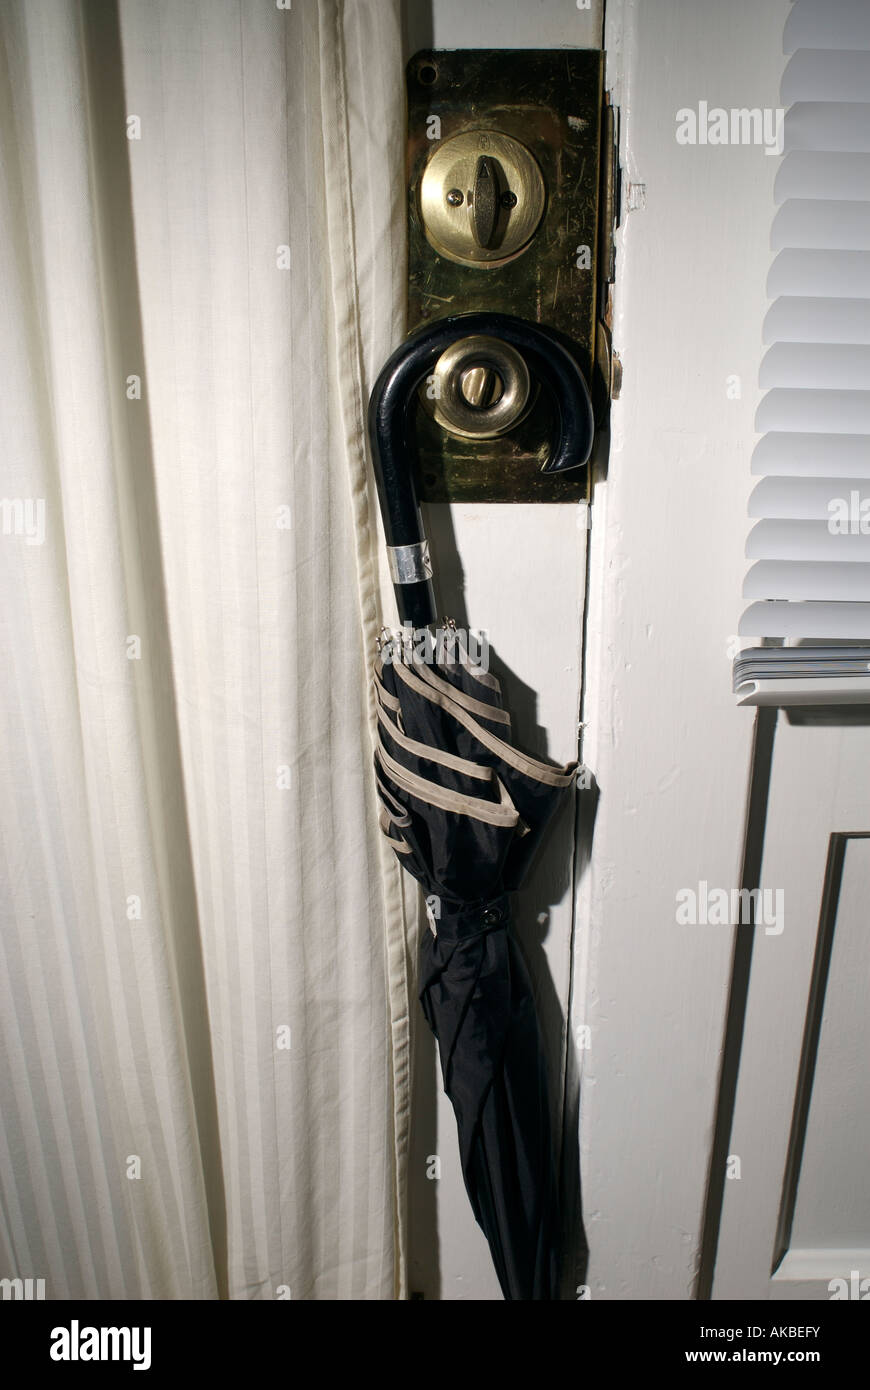 A black umbrella hanging on a brass door nob Stock Photo